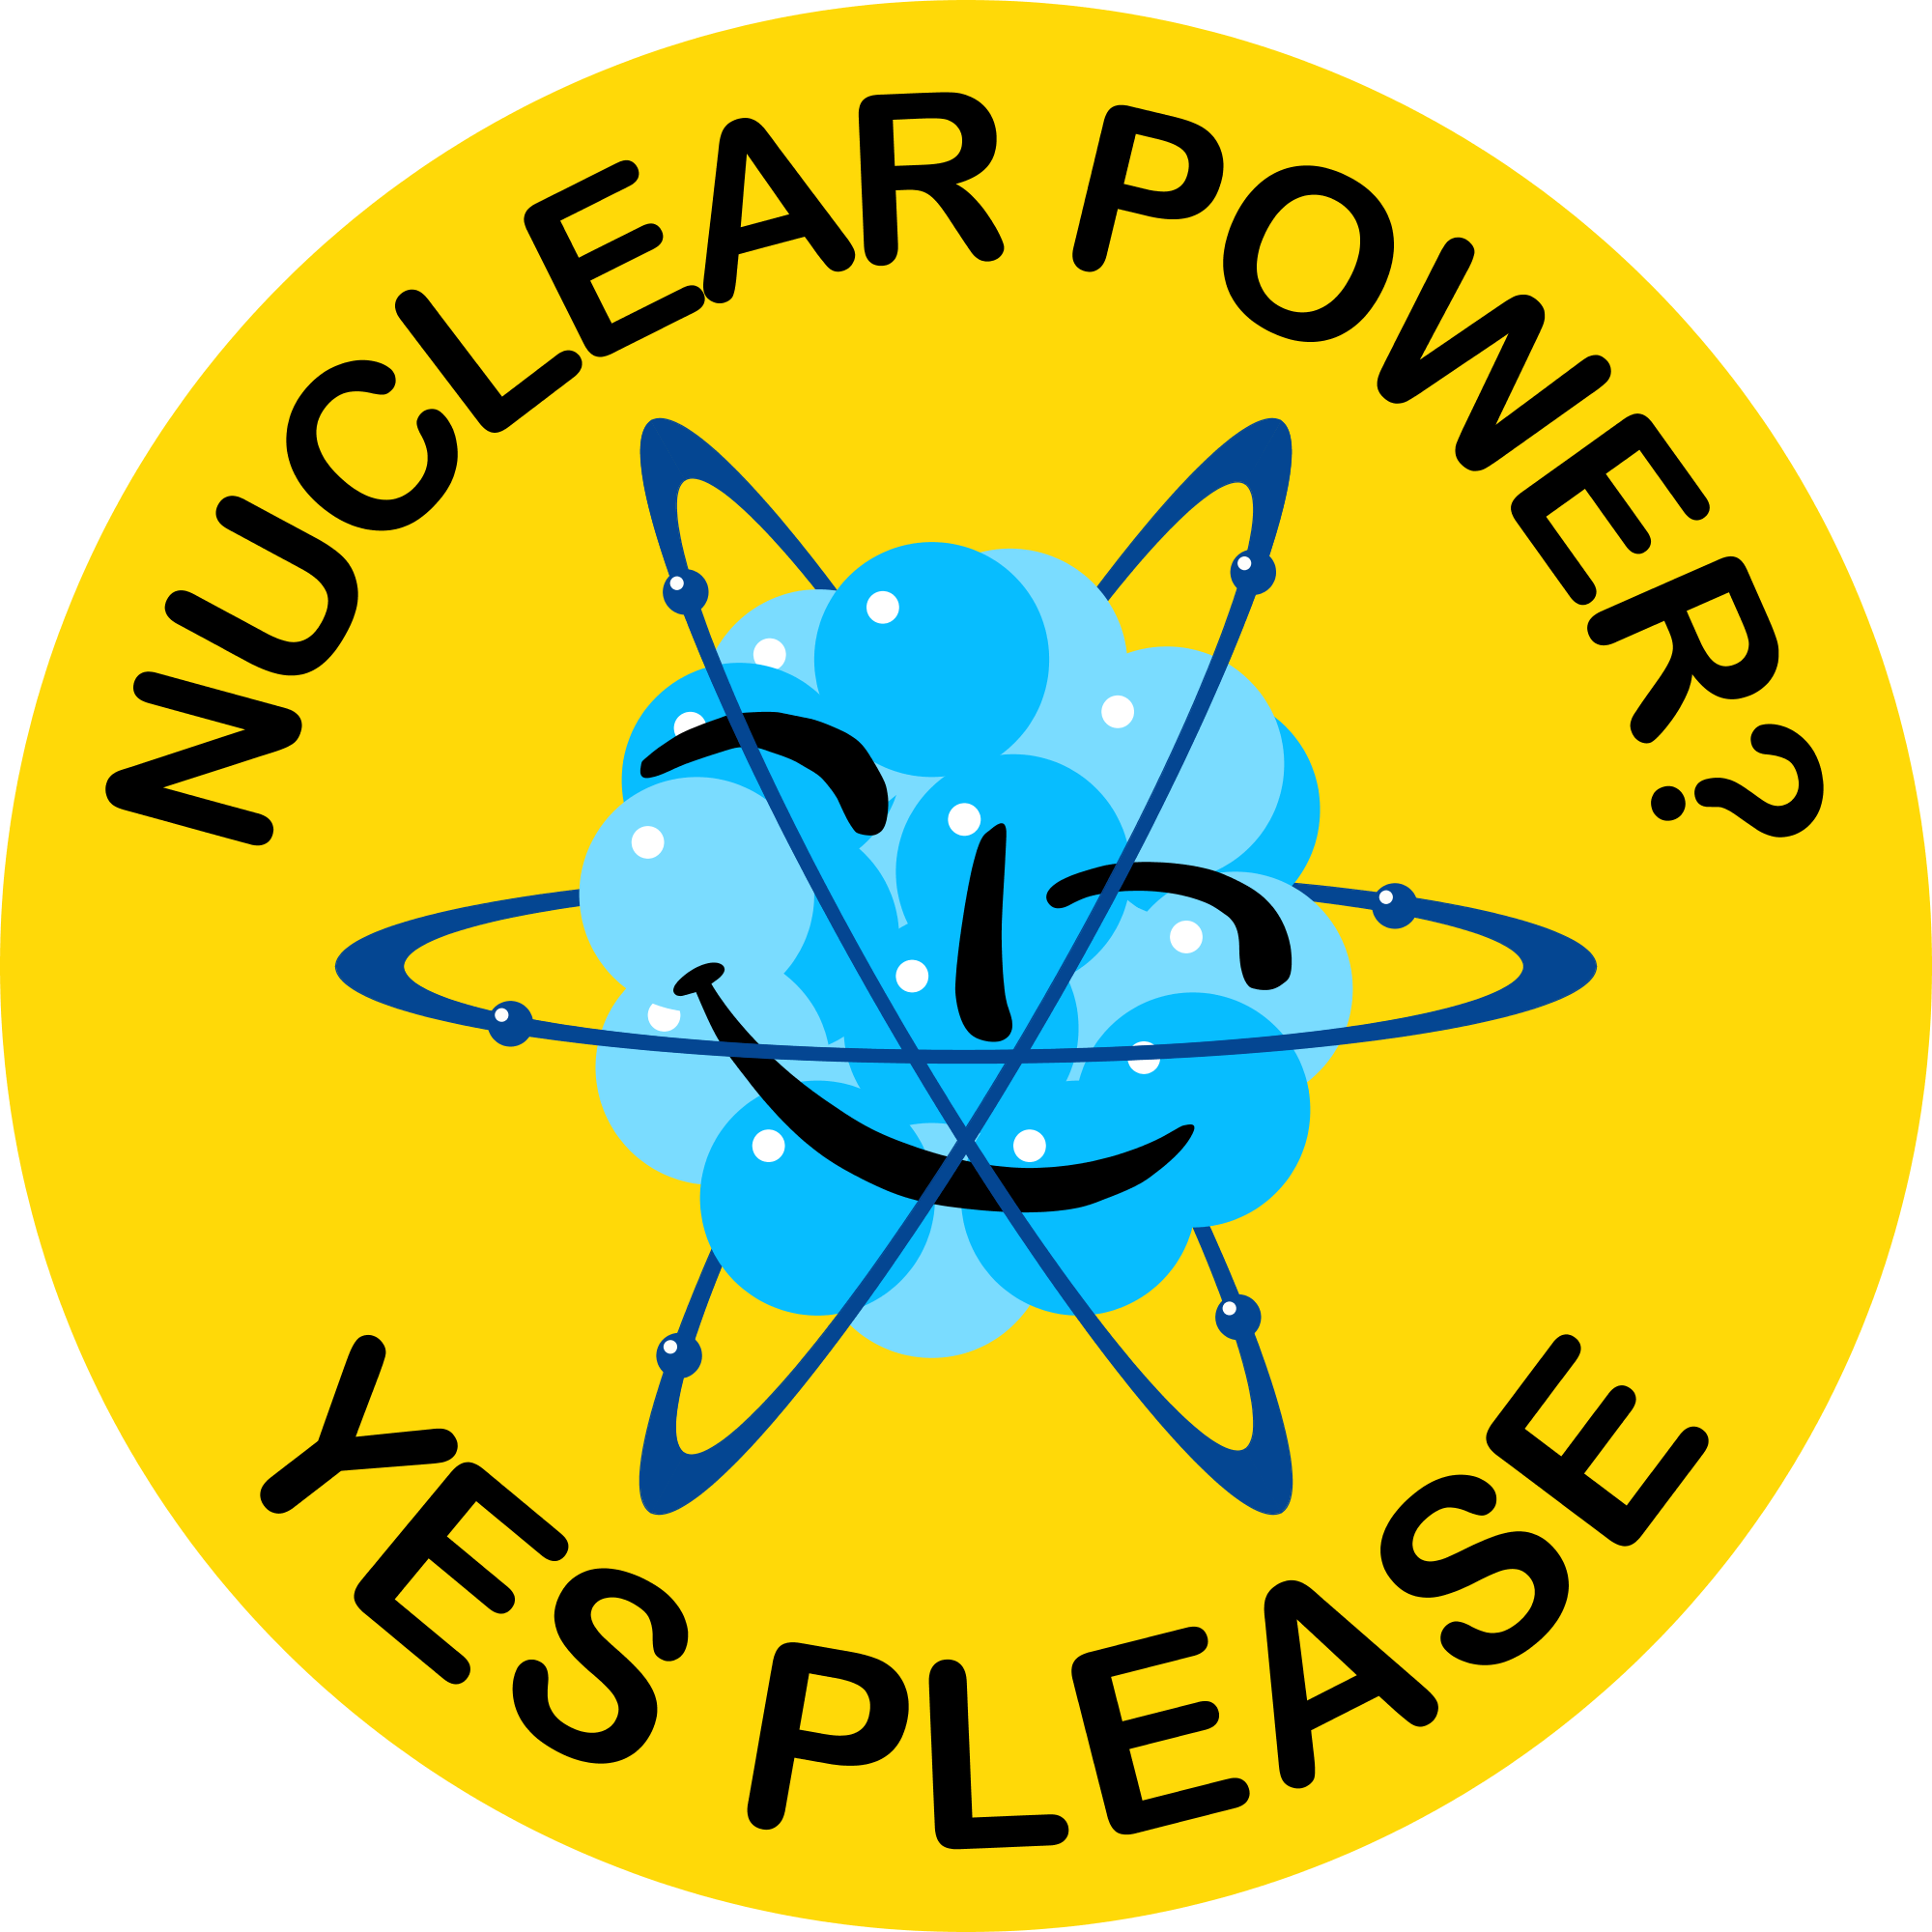 nuke clipart nuclear fission